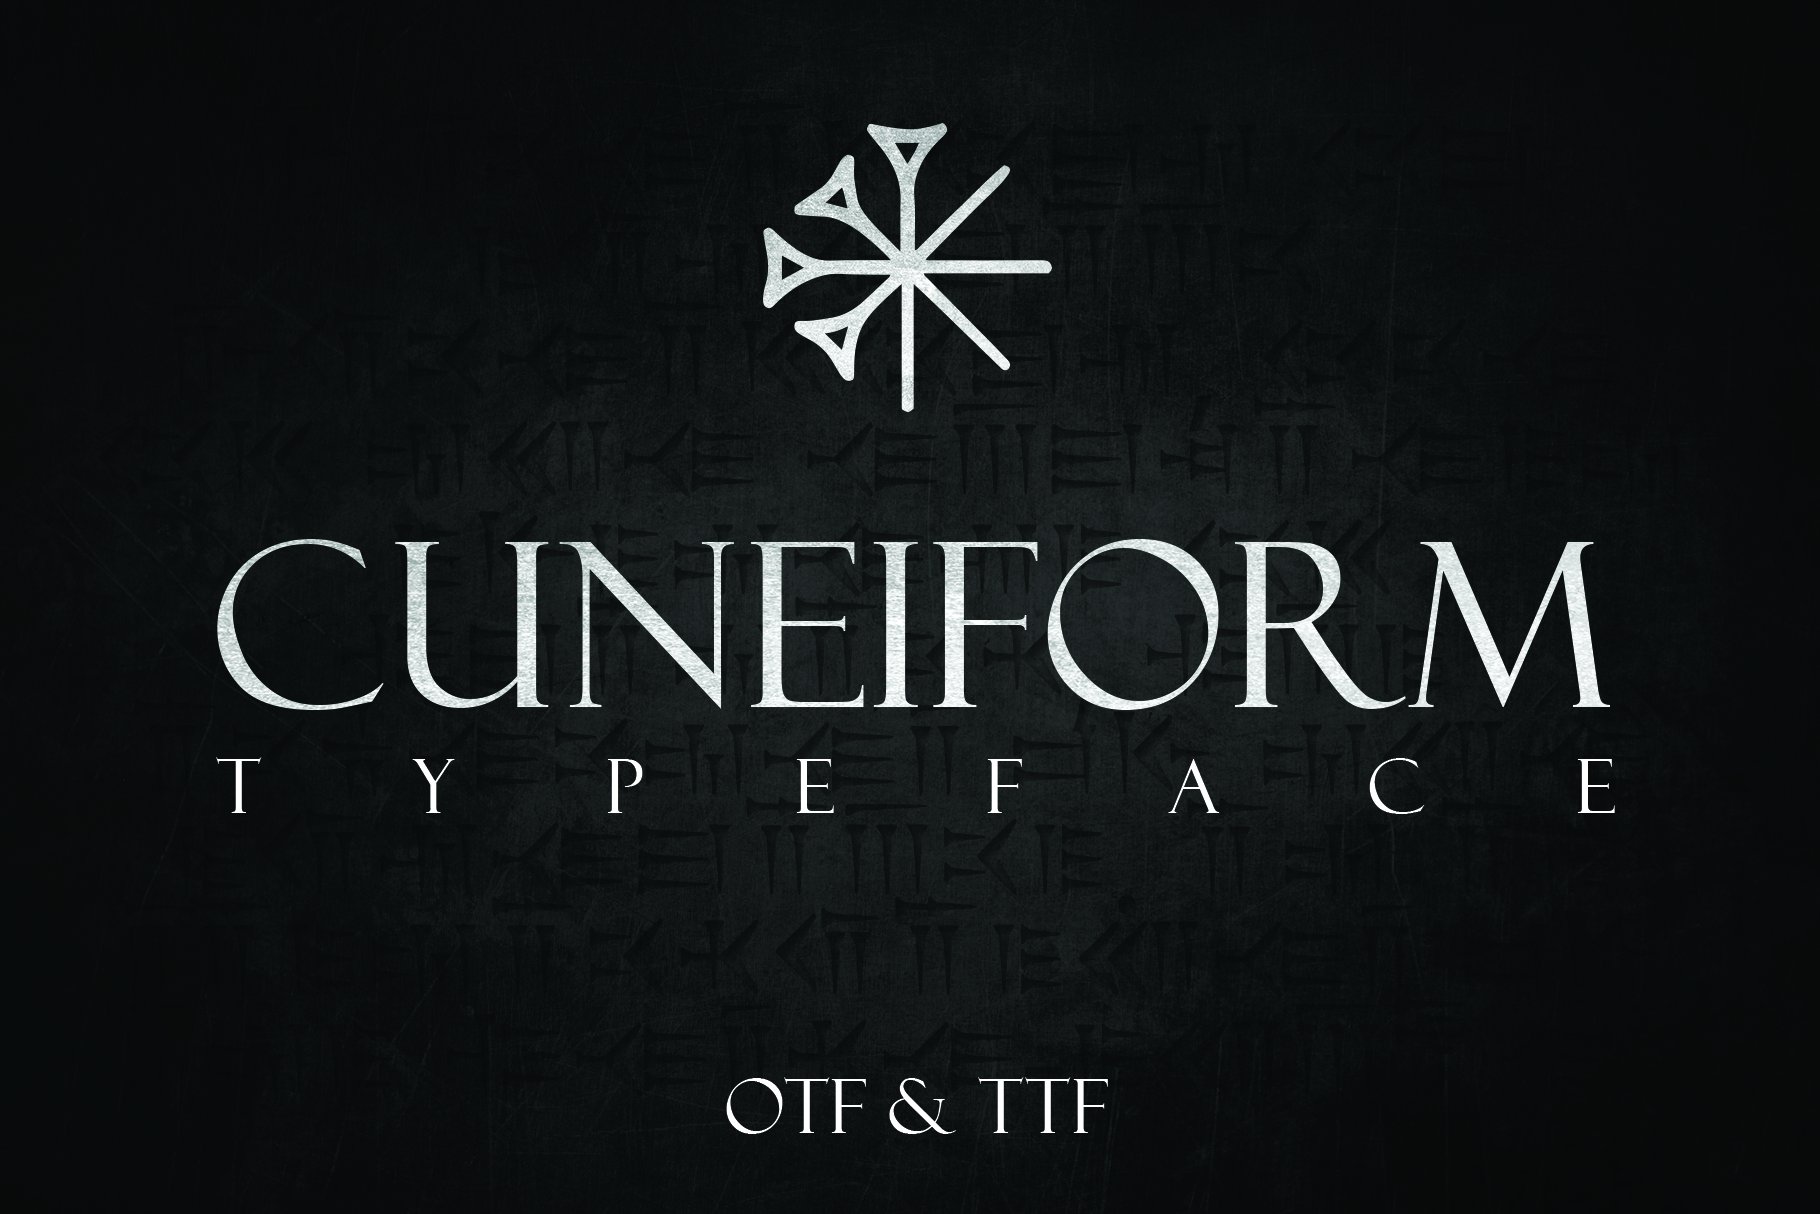 CUNEIFORM: An Ancient Typeface cover image.